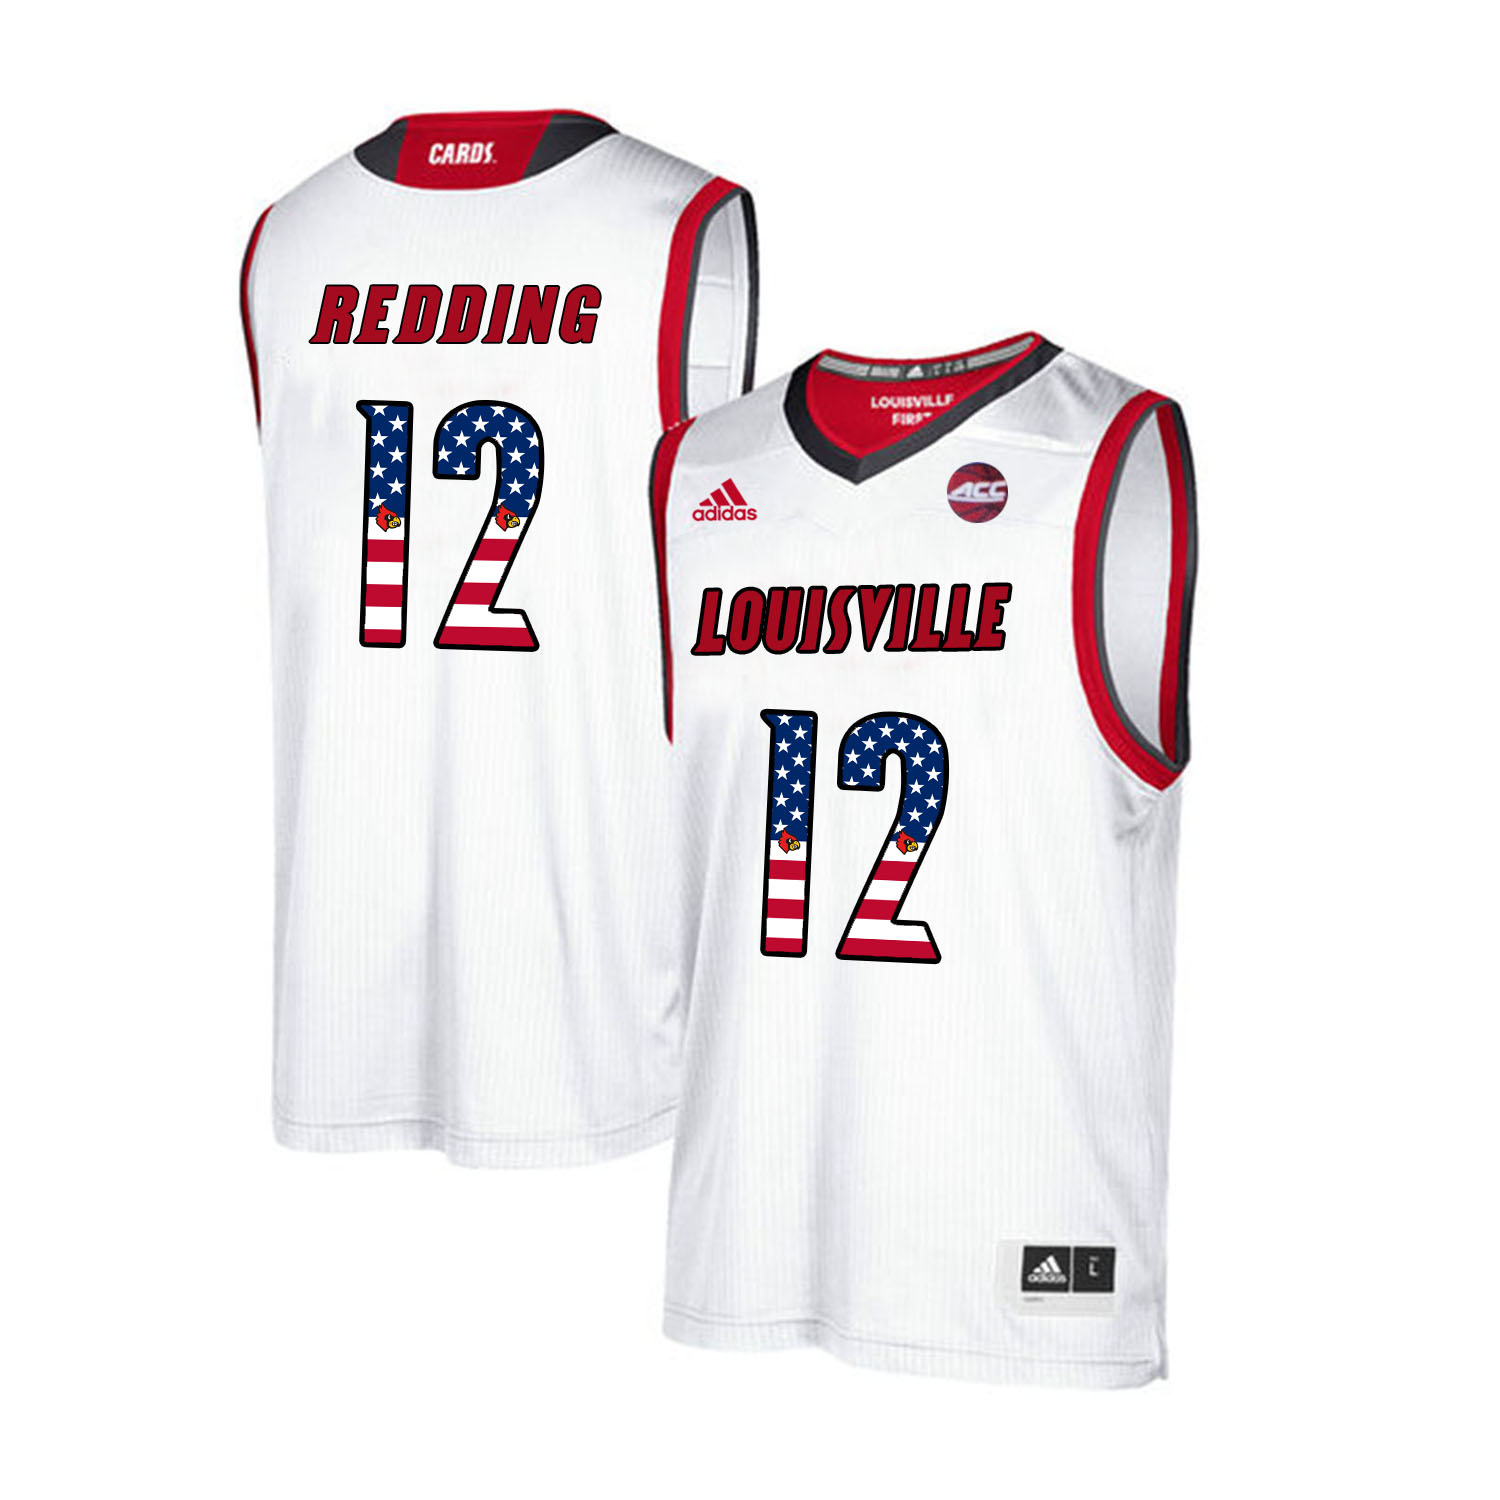 Louisville Cardinals 12 Jacob Redding White USA Flag College Basketball Jersey